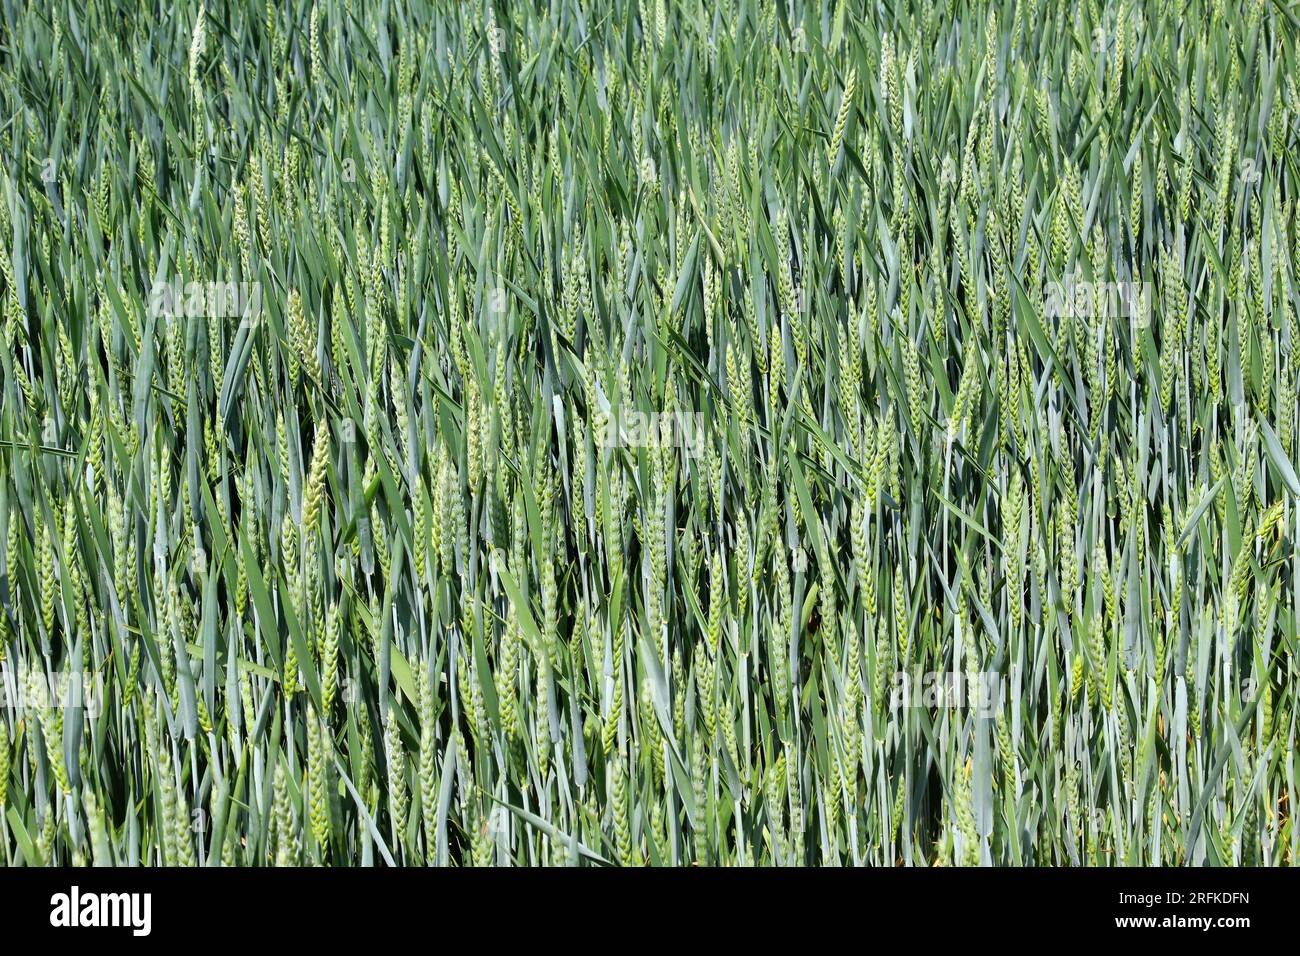 On the farm field growing green winter wheat Stock Photo